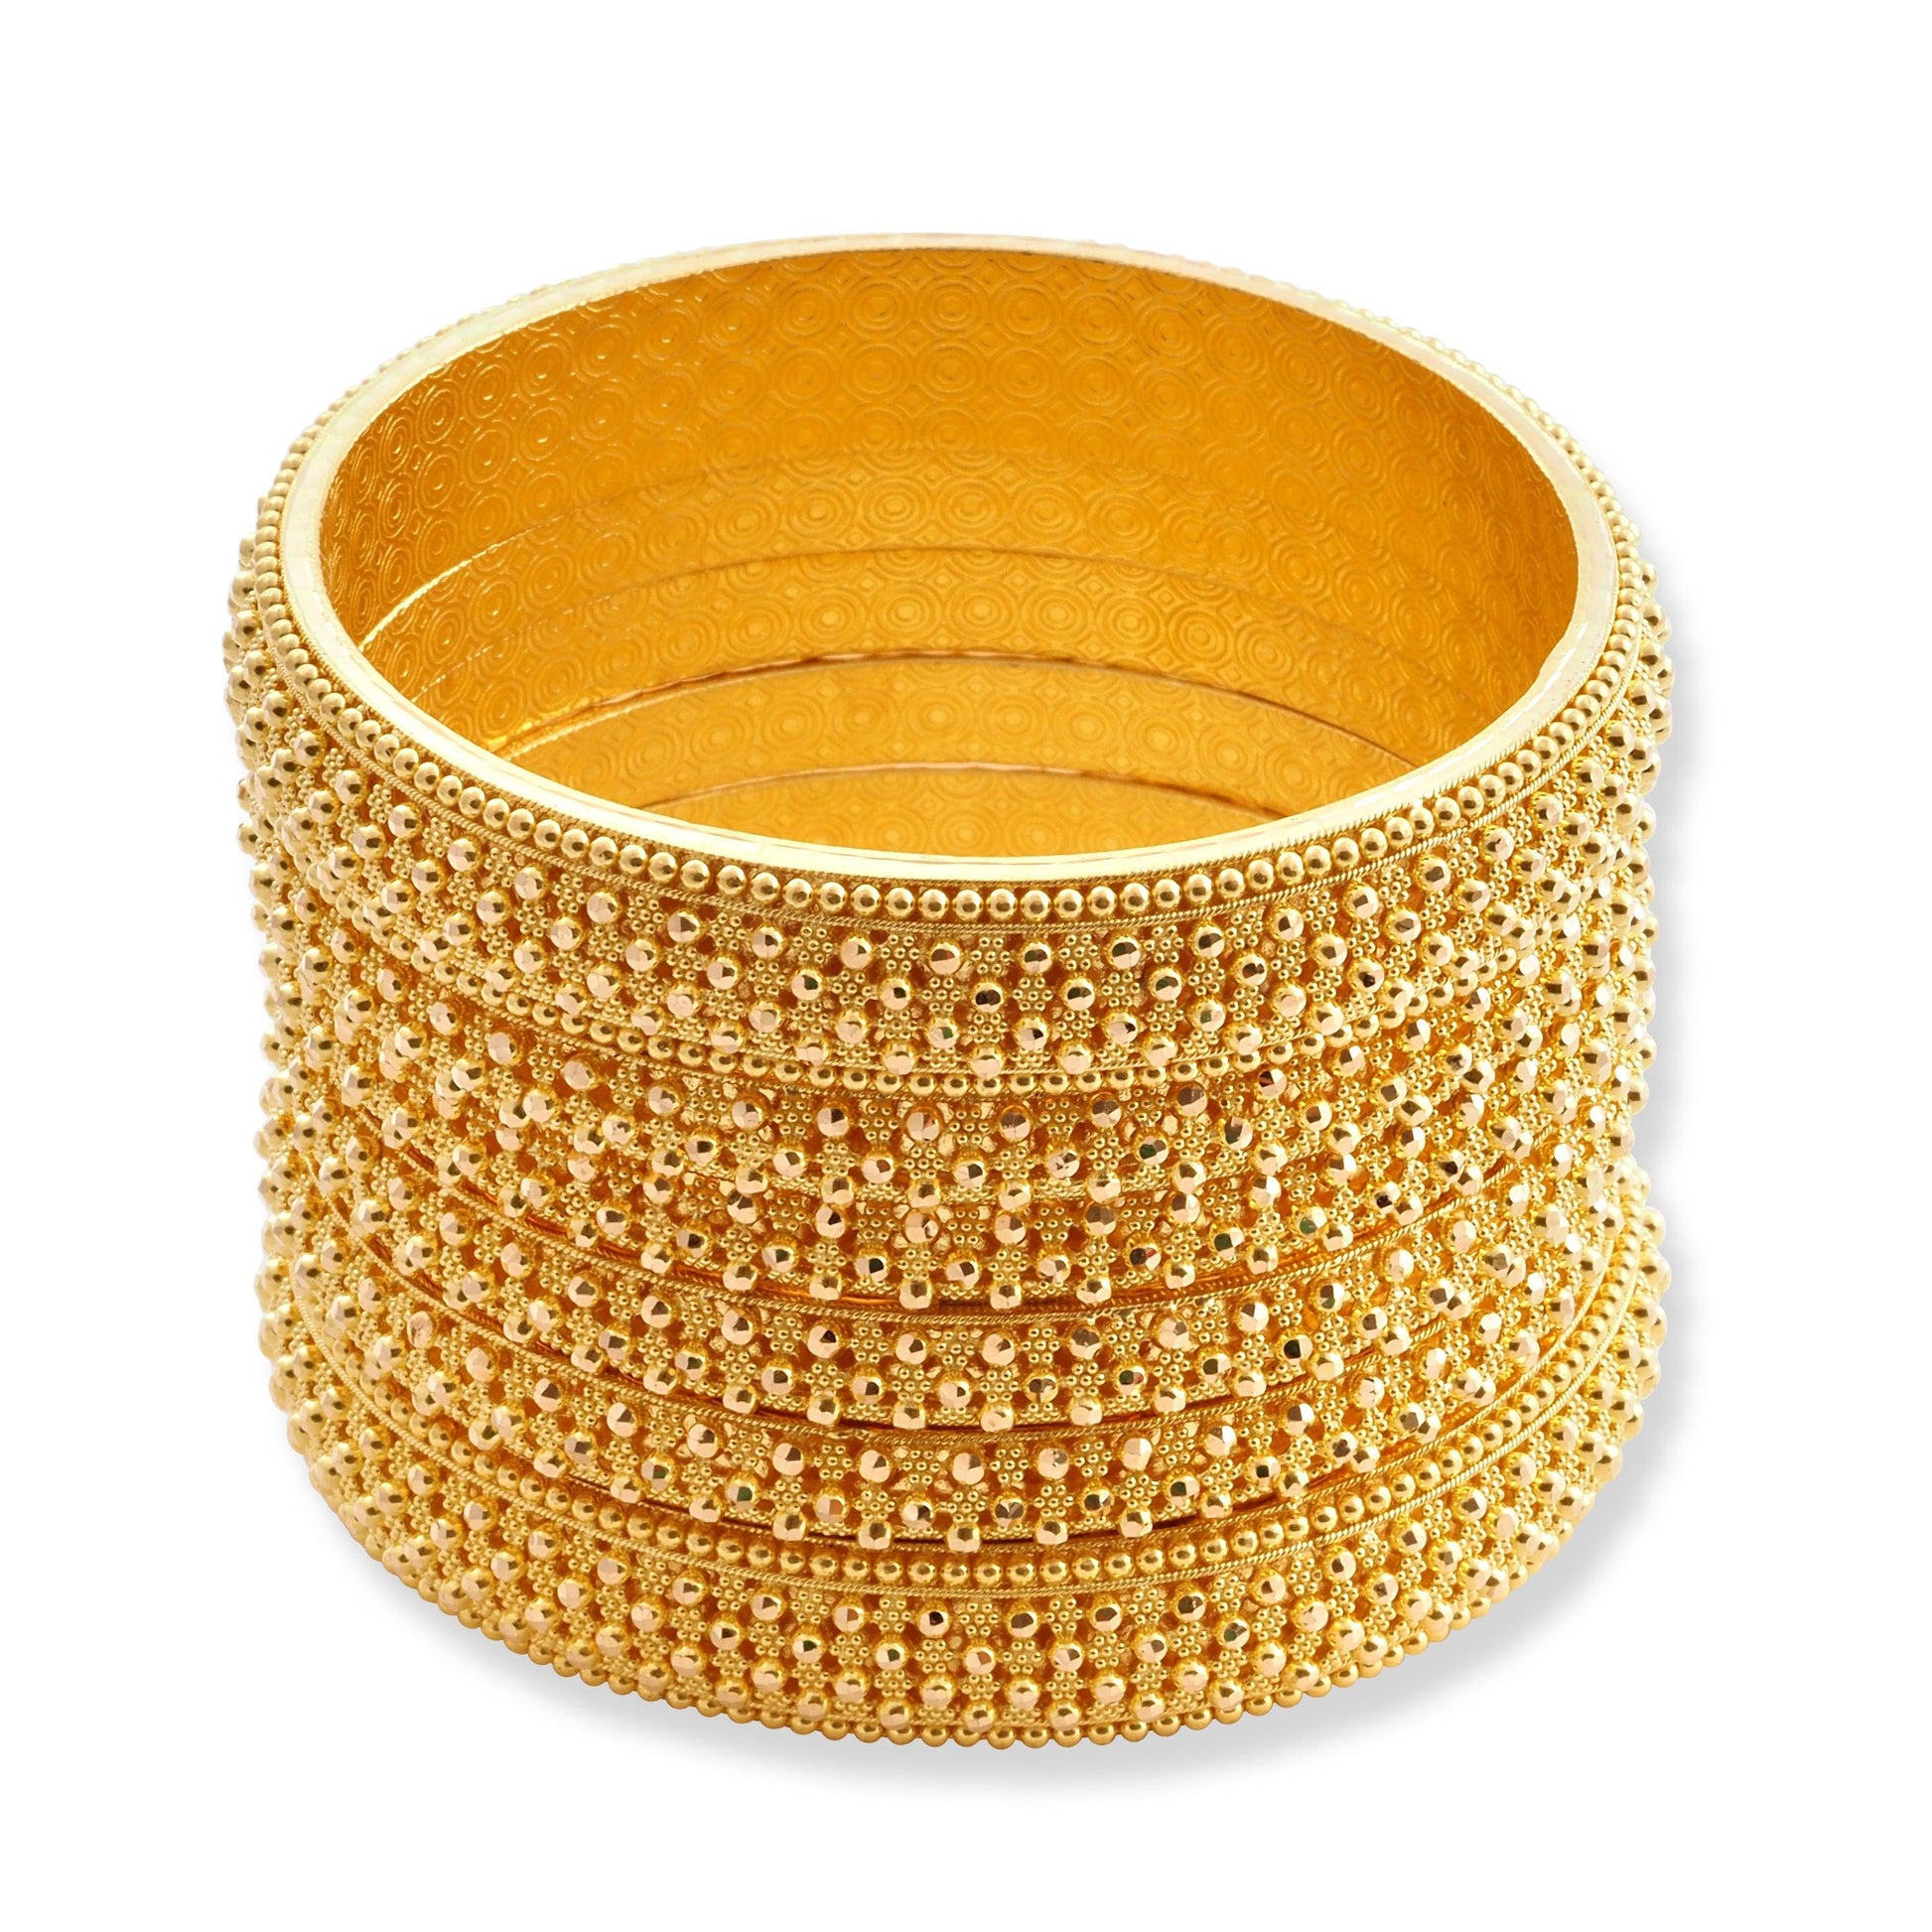 Set of Six 22ct Gold Bangles with Diamond Cut Bead Design B-8580 - Minar Jewellers